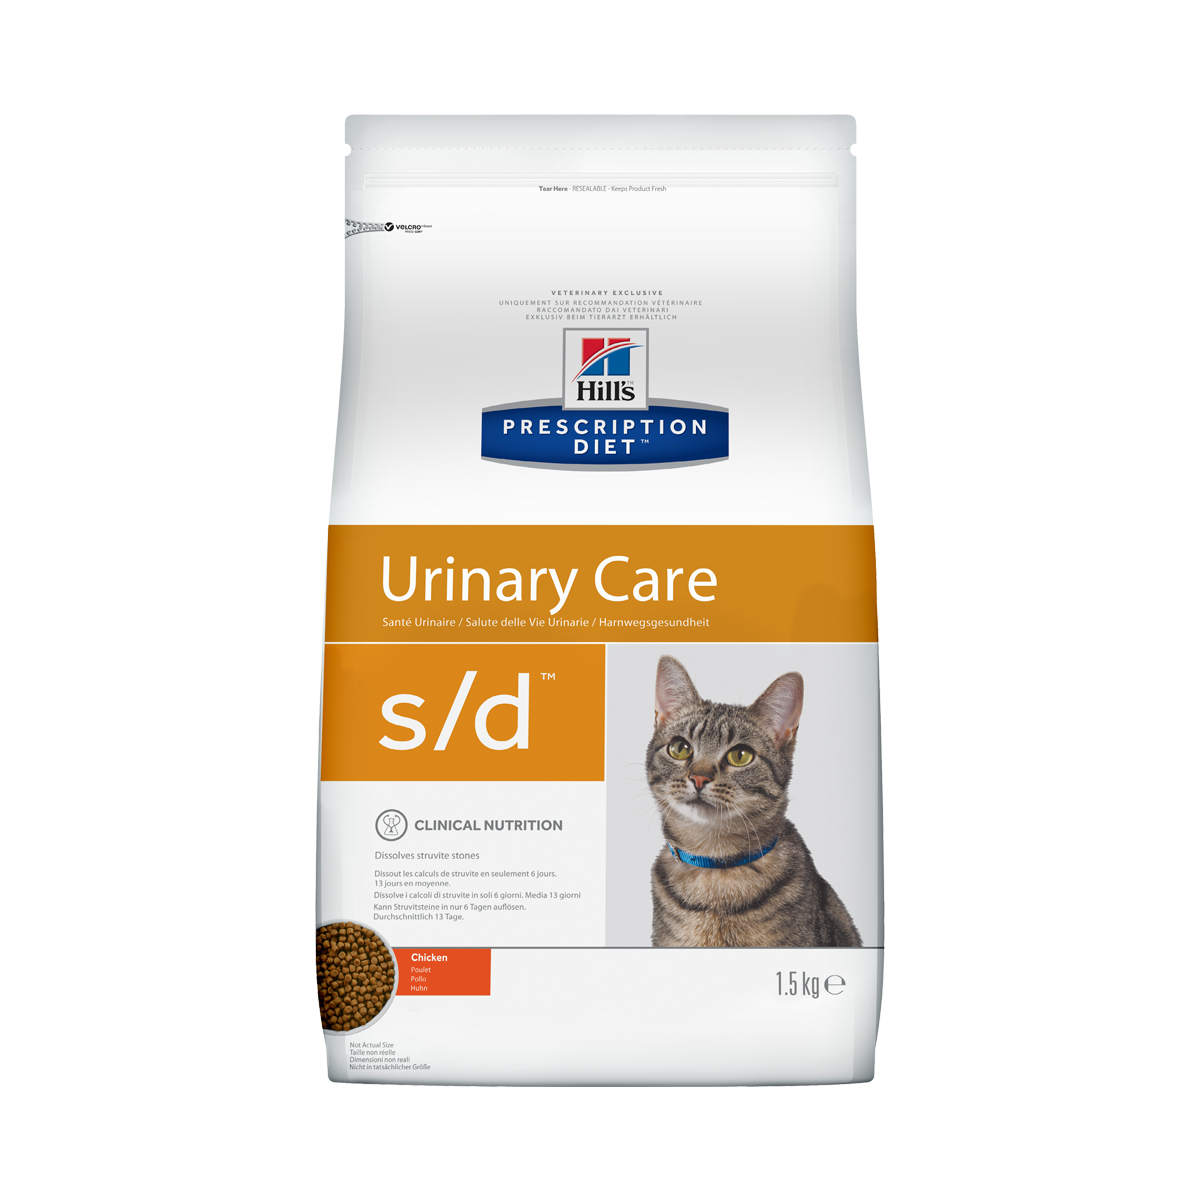 Hill's PD s/d Urinary Care Корм-диета для кошек, с курицей